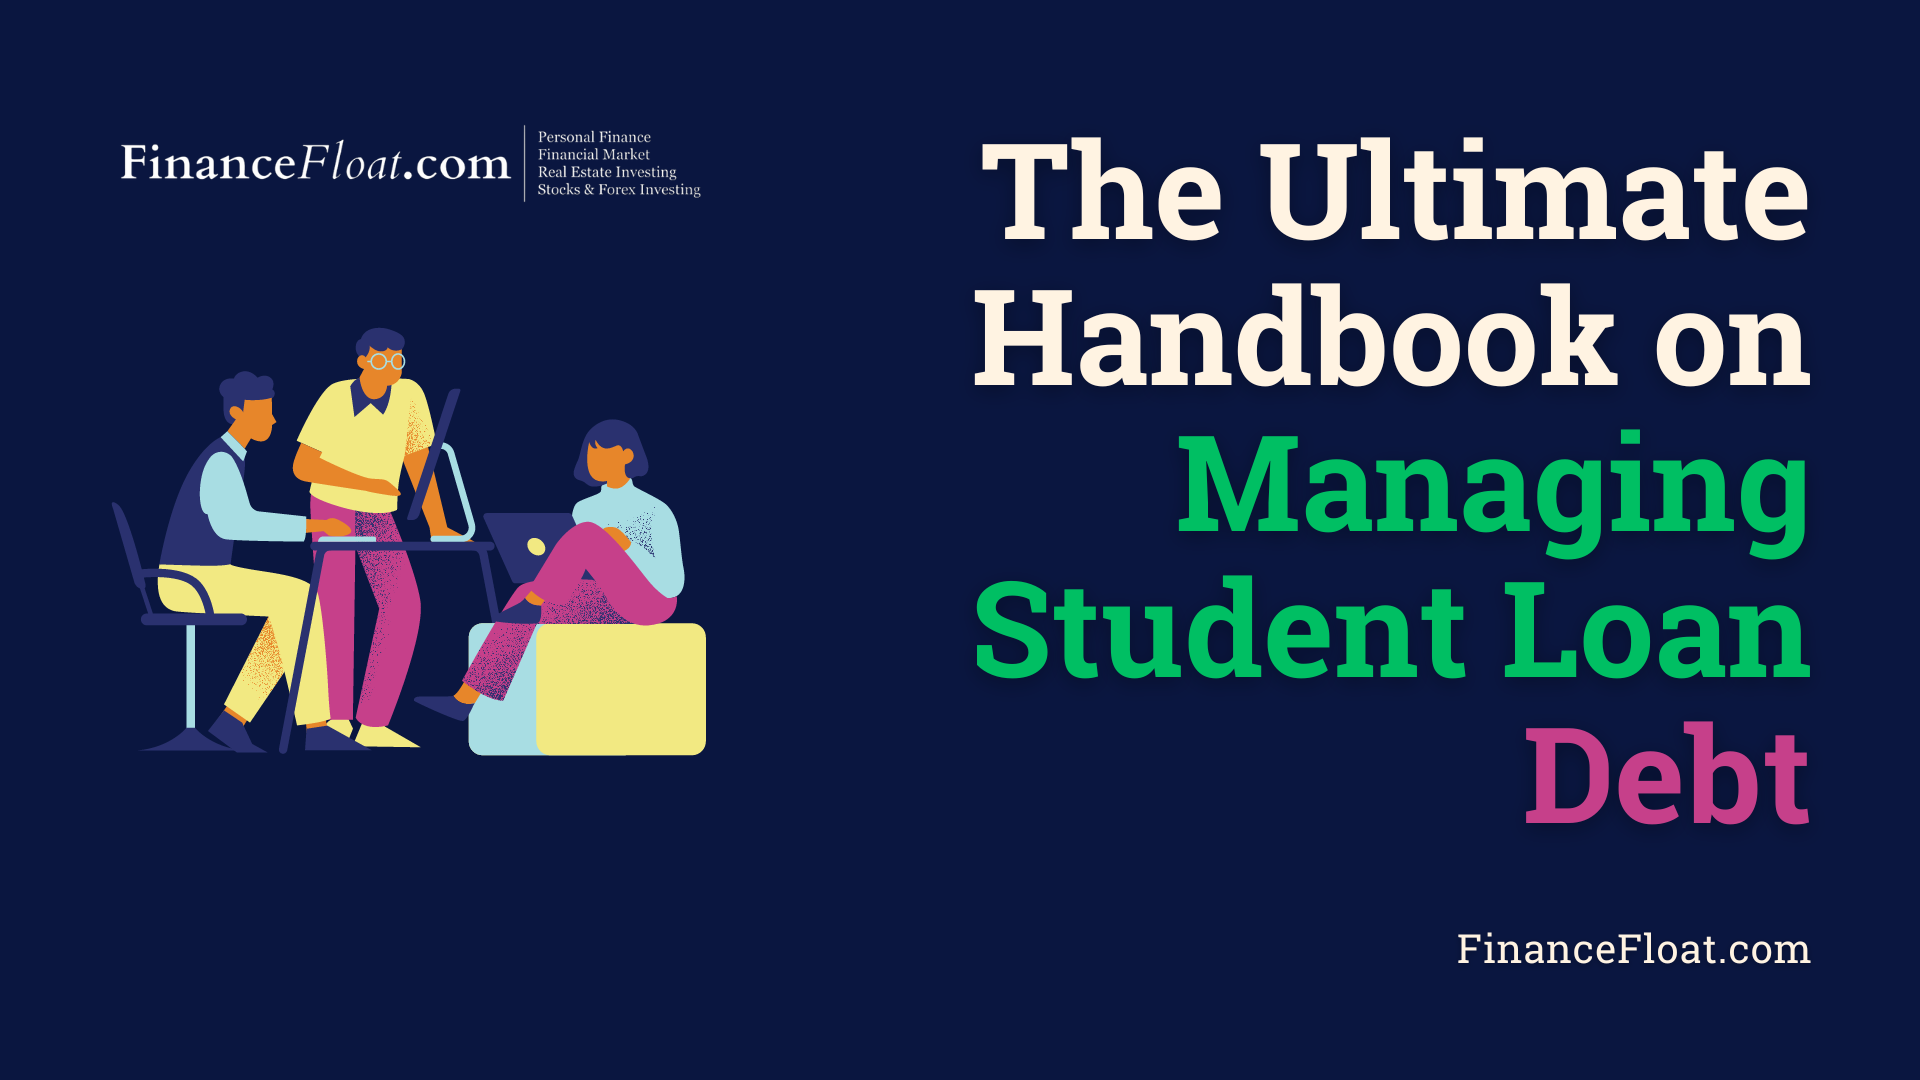 The Ultimate Handbook on Managing Student Loan Debt